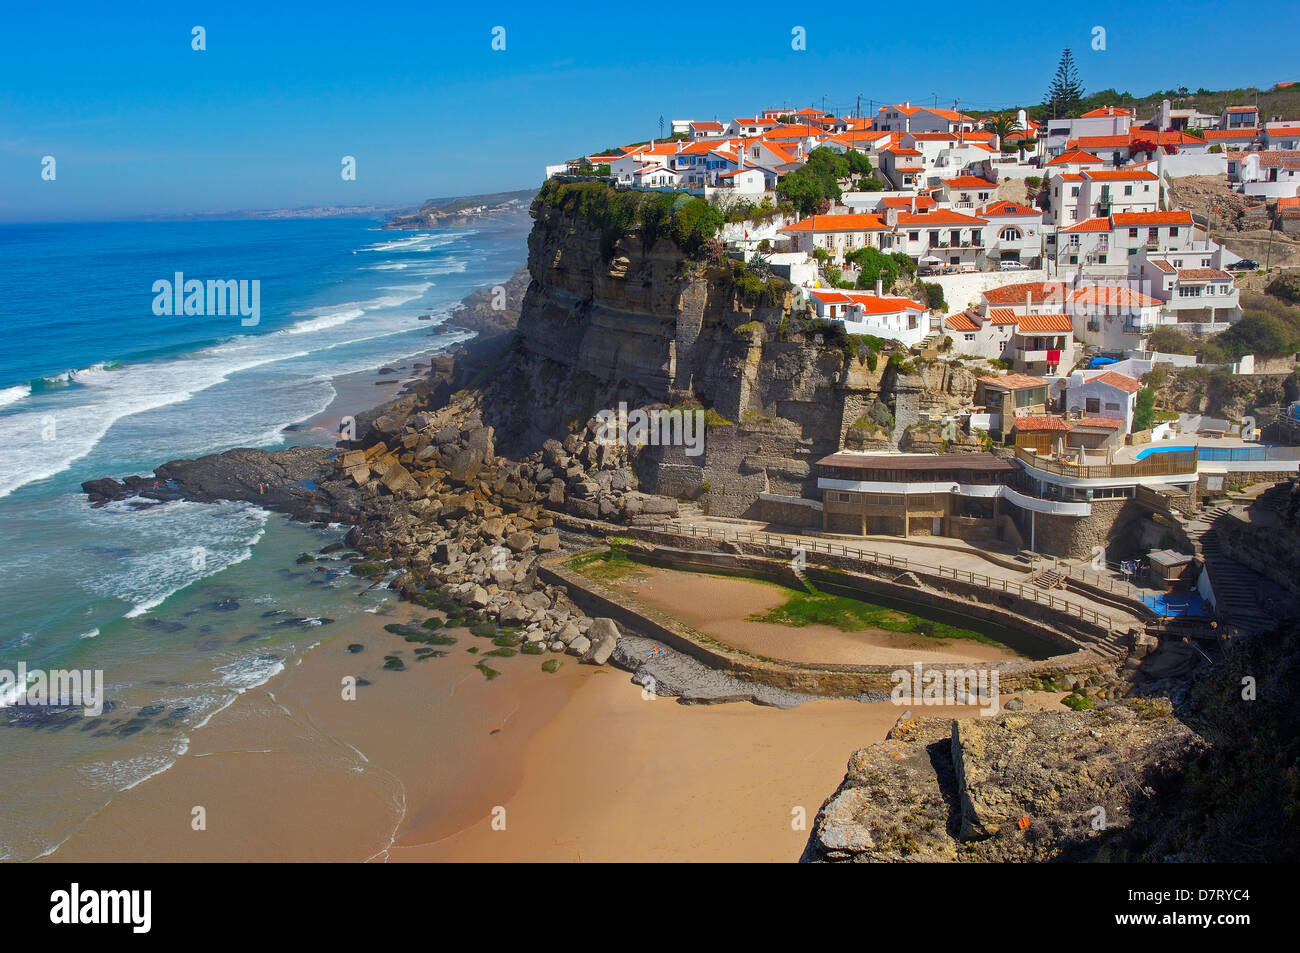 Azenhas do Mar, Lisbon district, Sintra coast, Portugal, Europe Stock Photo